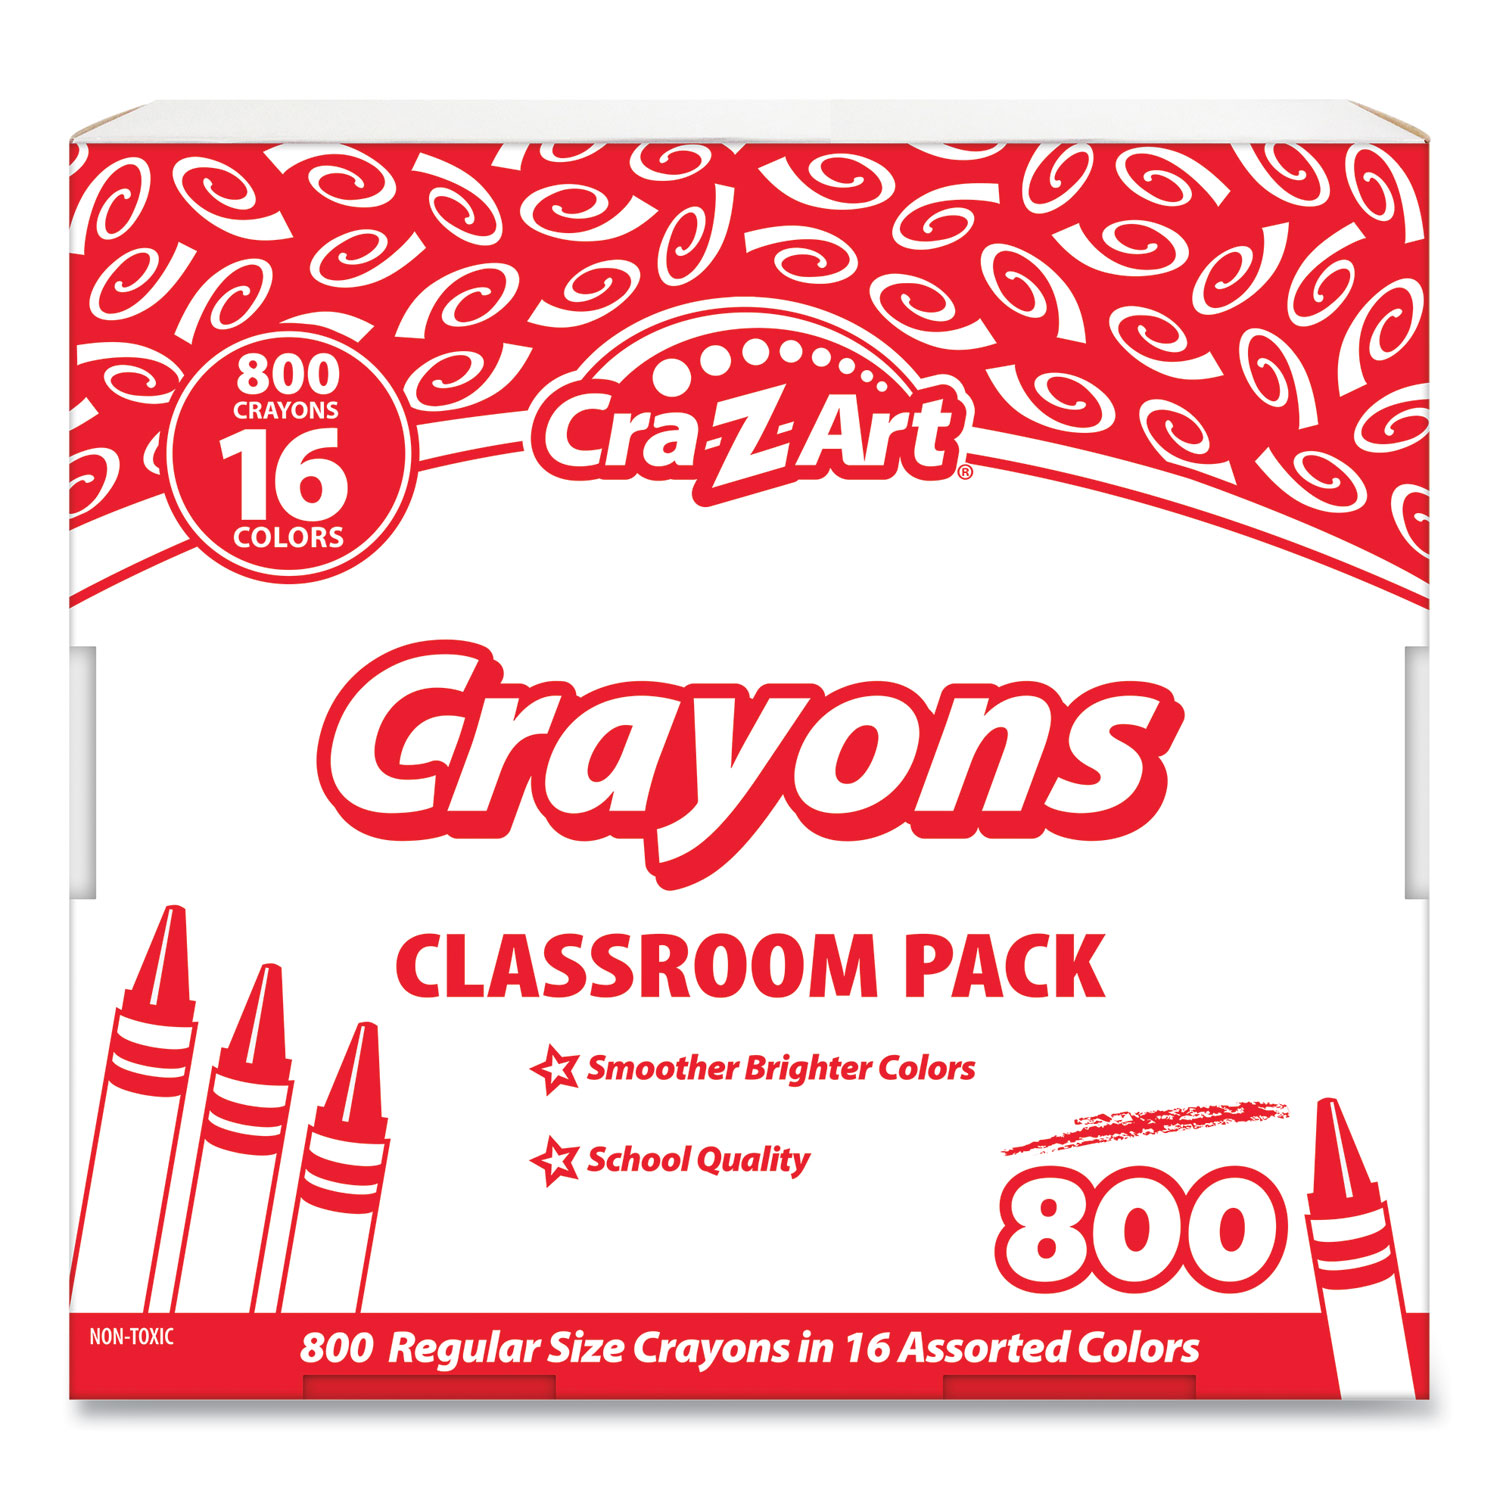 Bulk Crayons, Carnation Pink, 12/Box